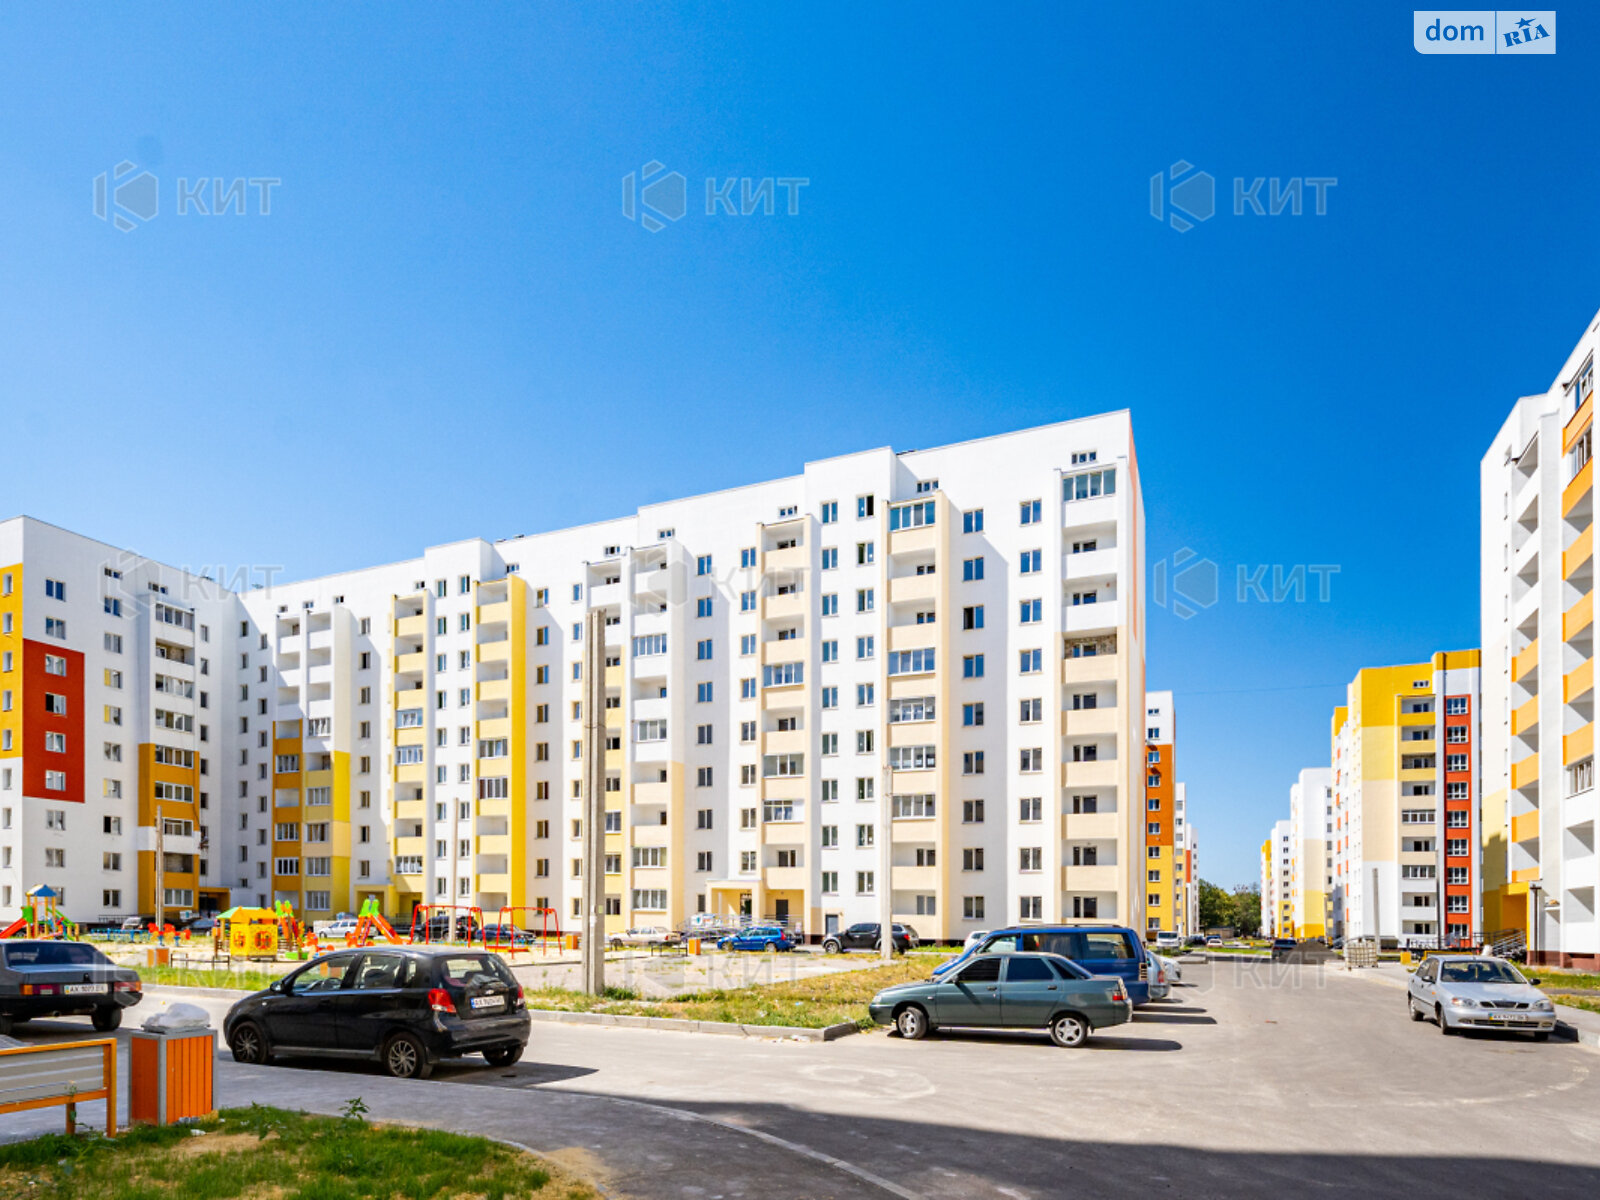 Продажа однокомнатной квартиры в Харькове, на ул. Мира 23, район ХТЗ фото 1